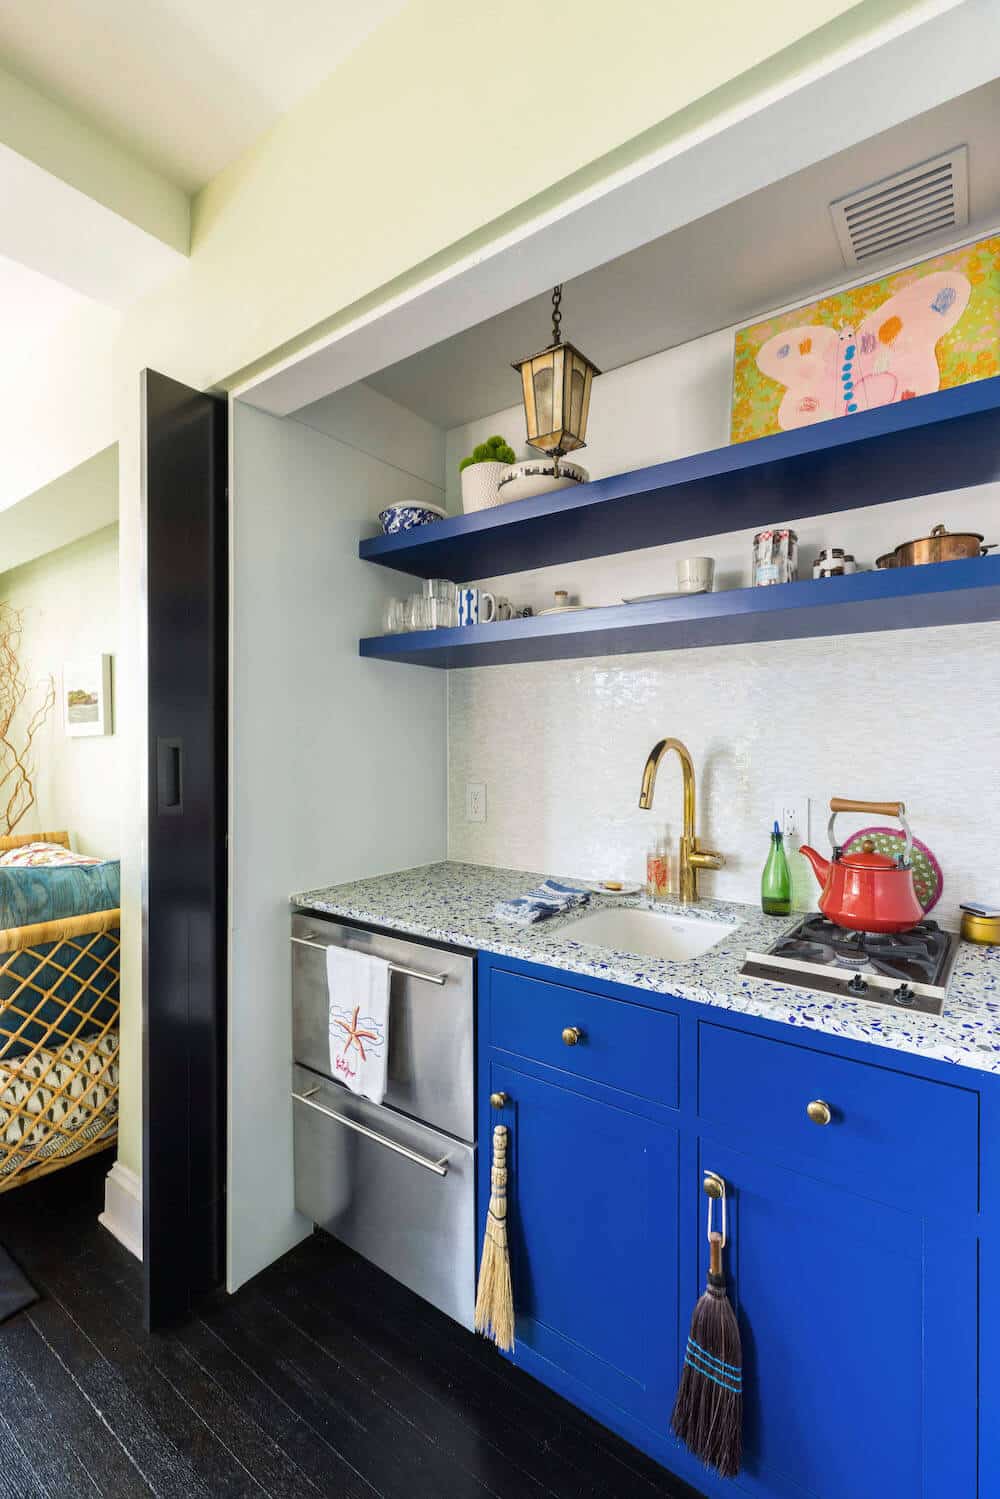 kobaltblauwe keukenkastjes met dubbele deuren om keuken weg te werken